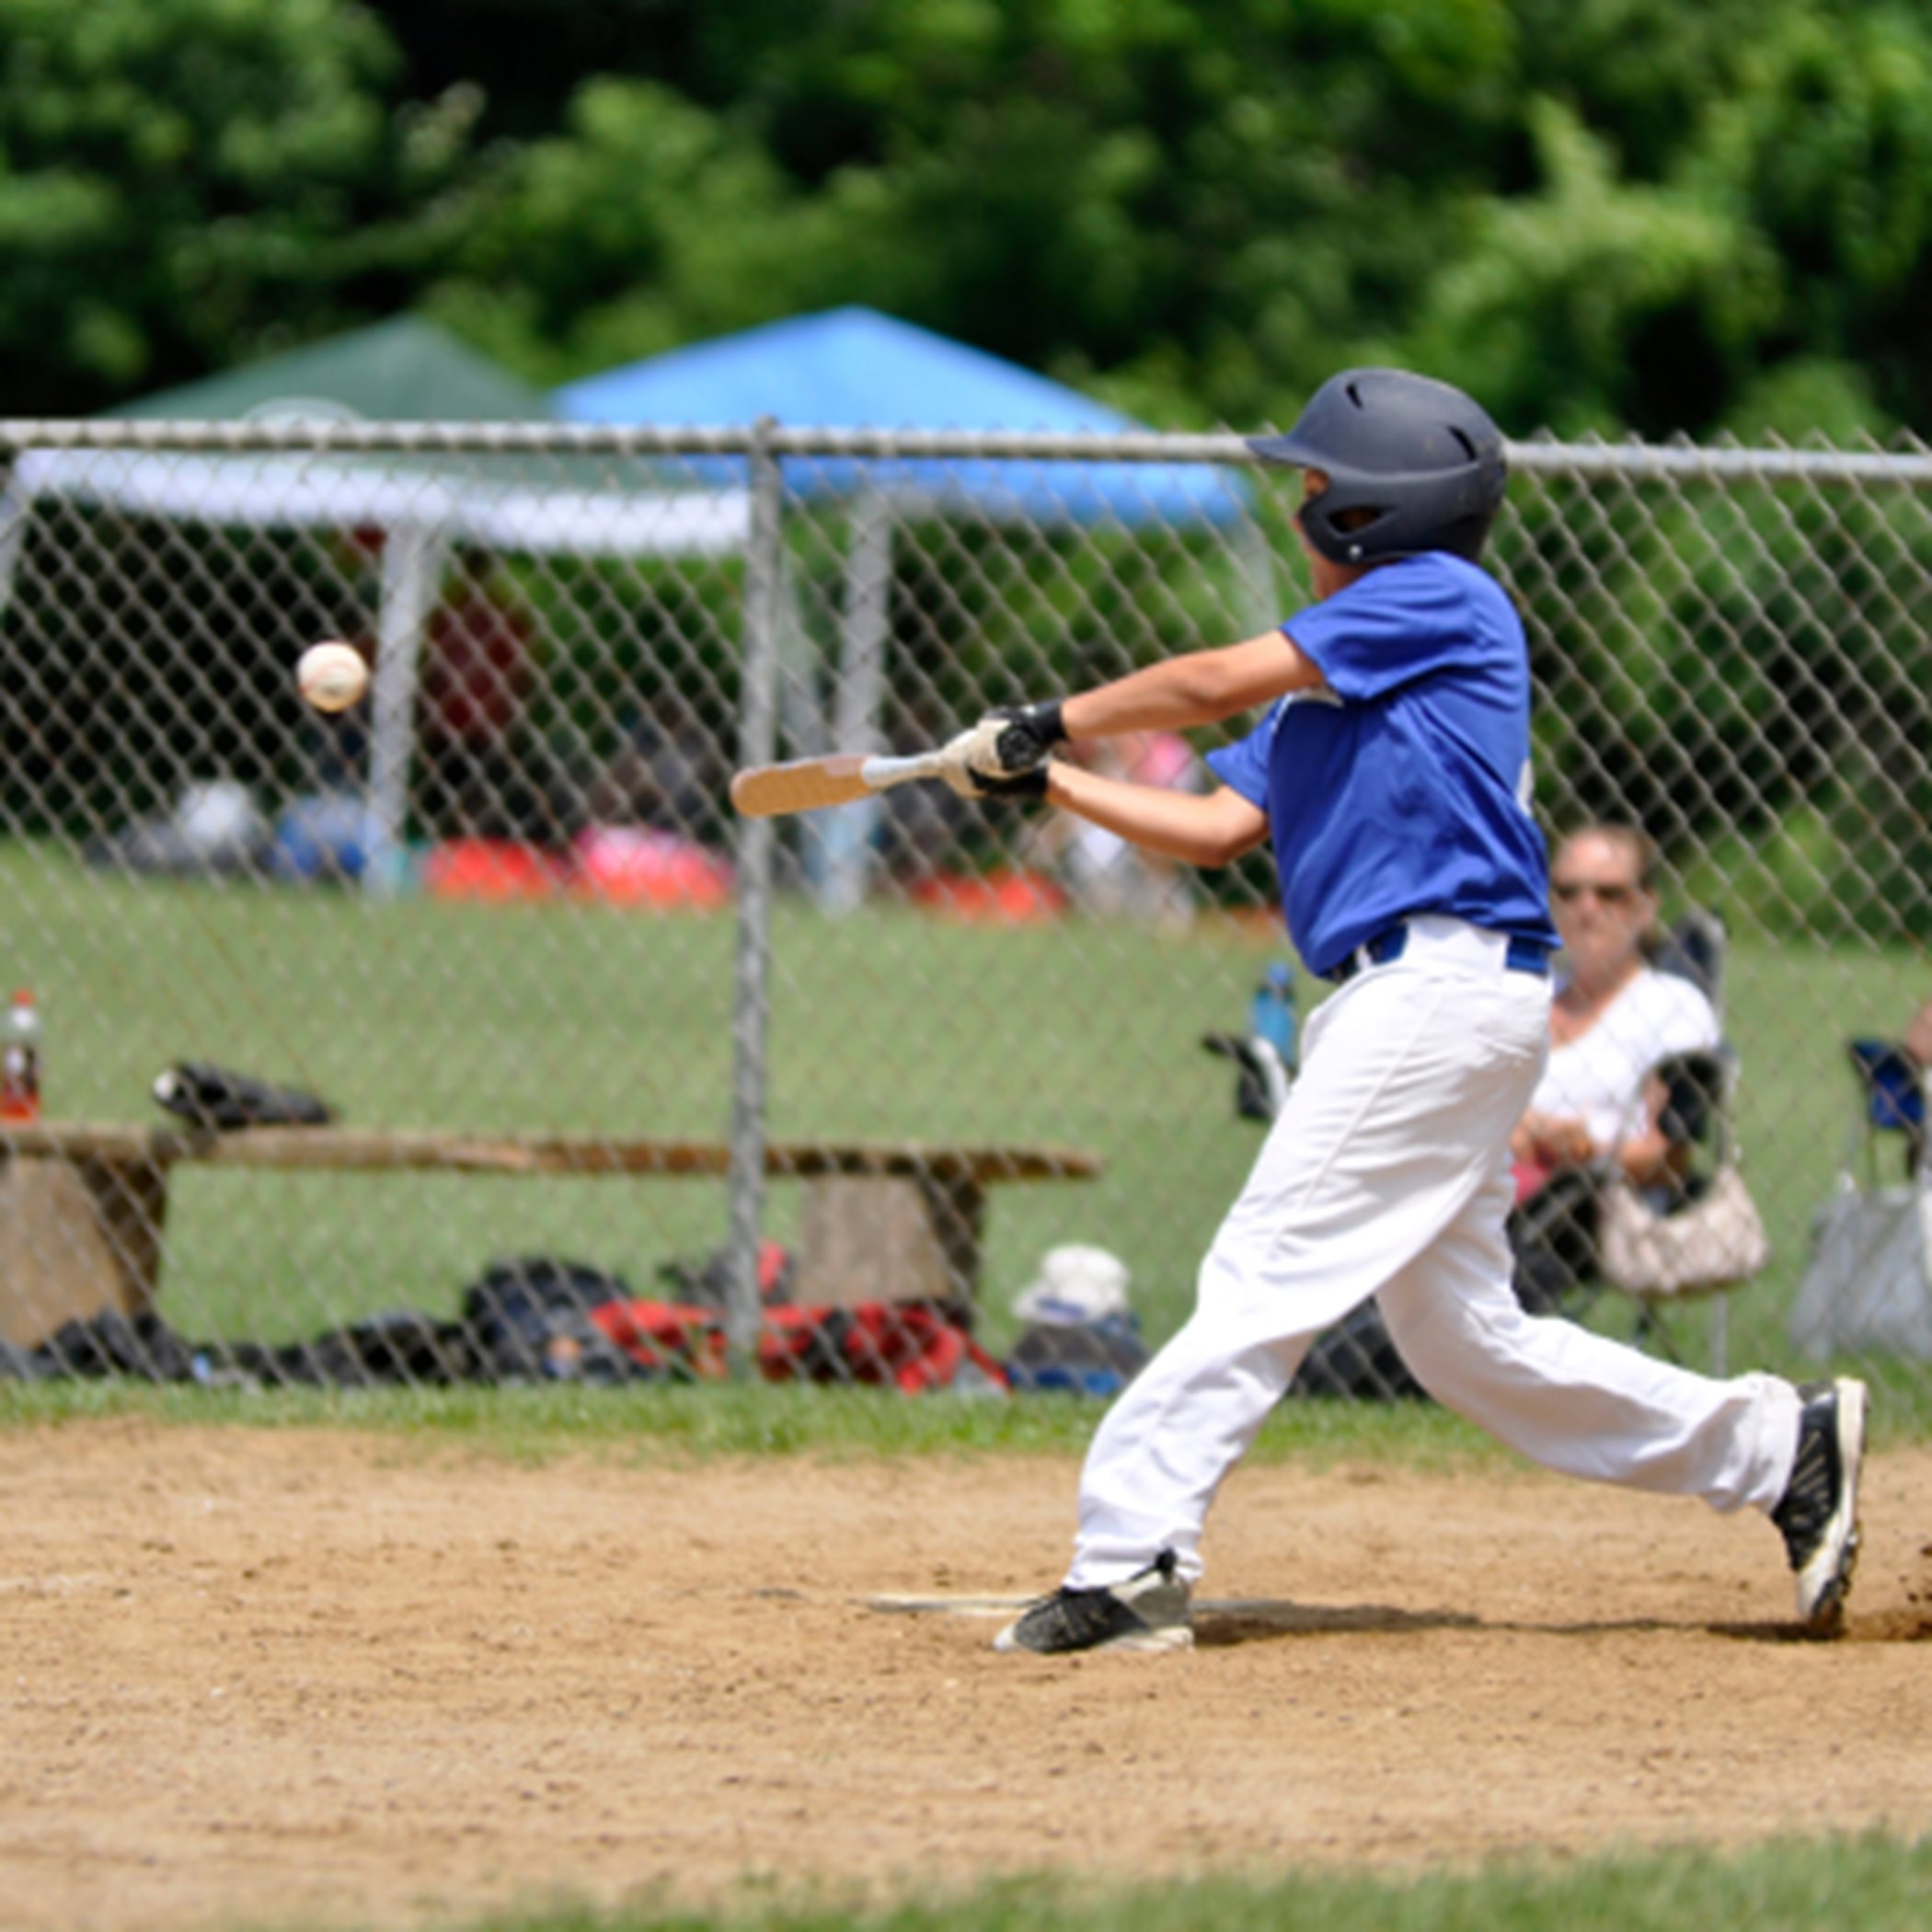 Boy swinging baseball at The Northern Lights Ball Fields